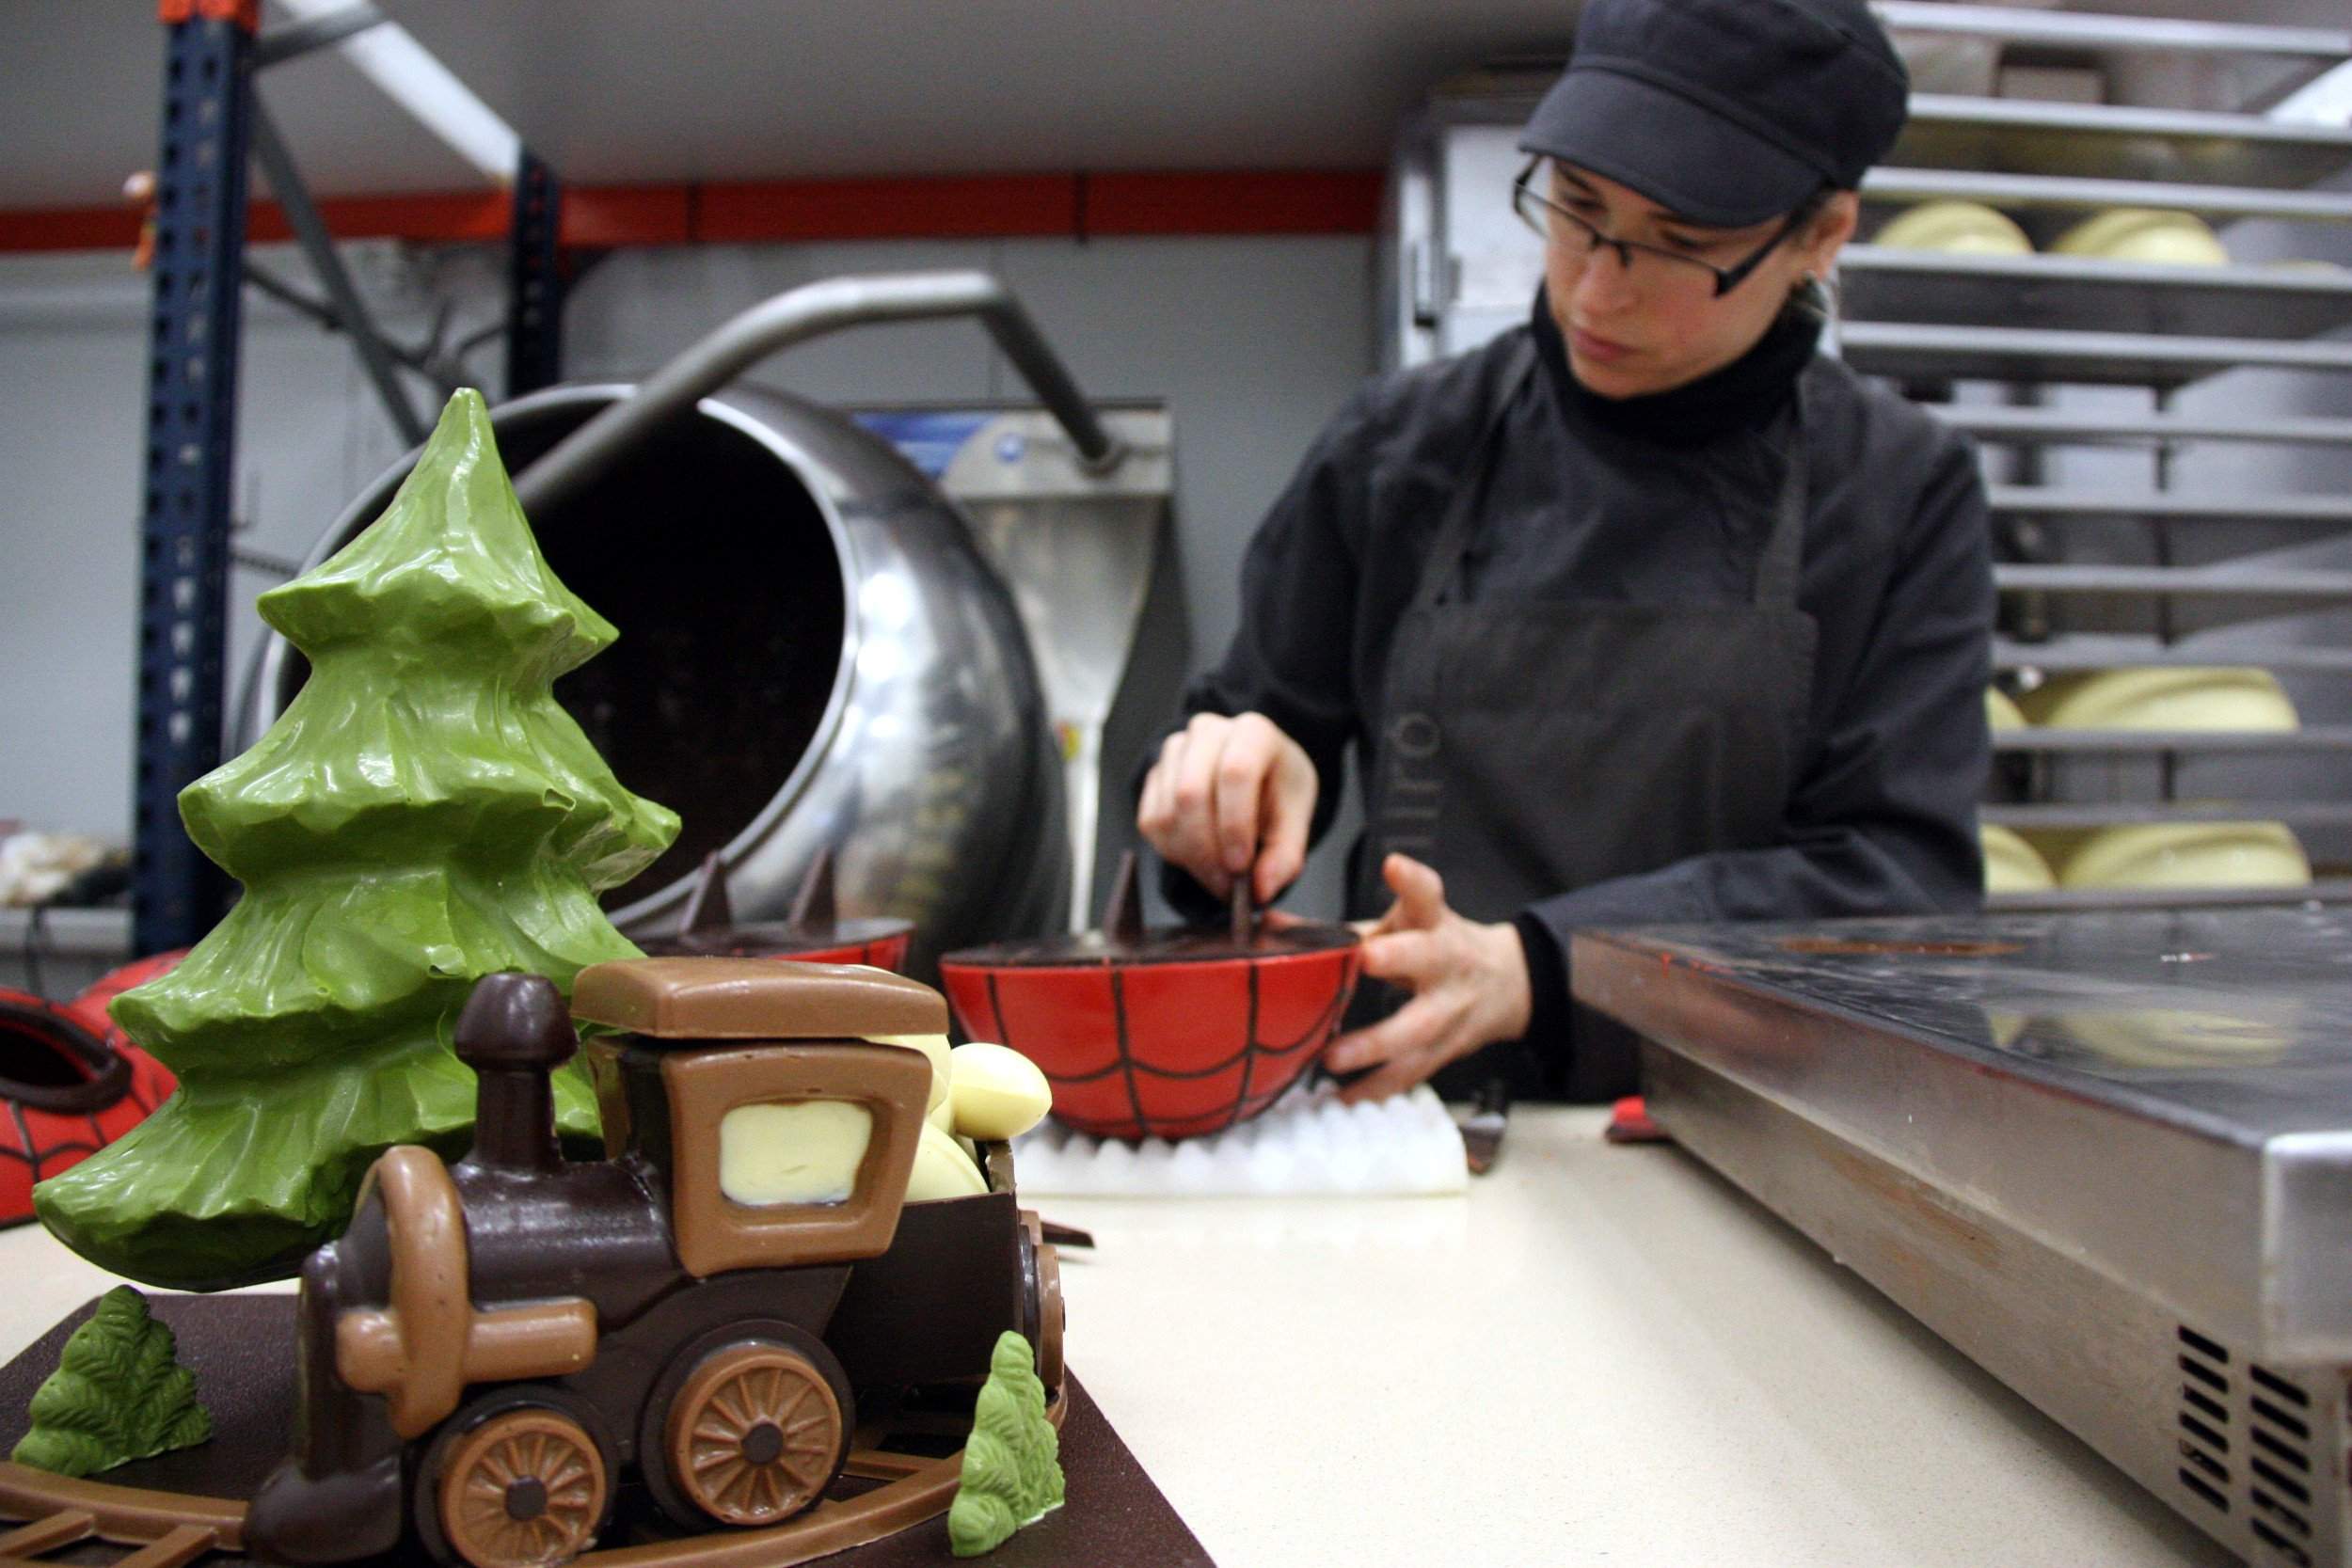 Els pastissers preveuen una pujada del 2% en la venda de mones artesanes